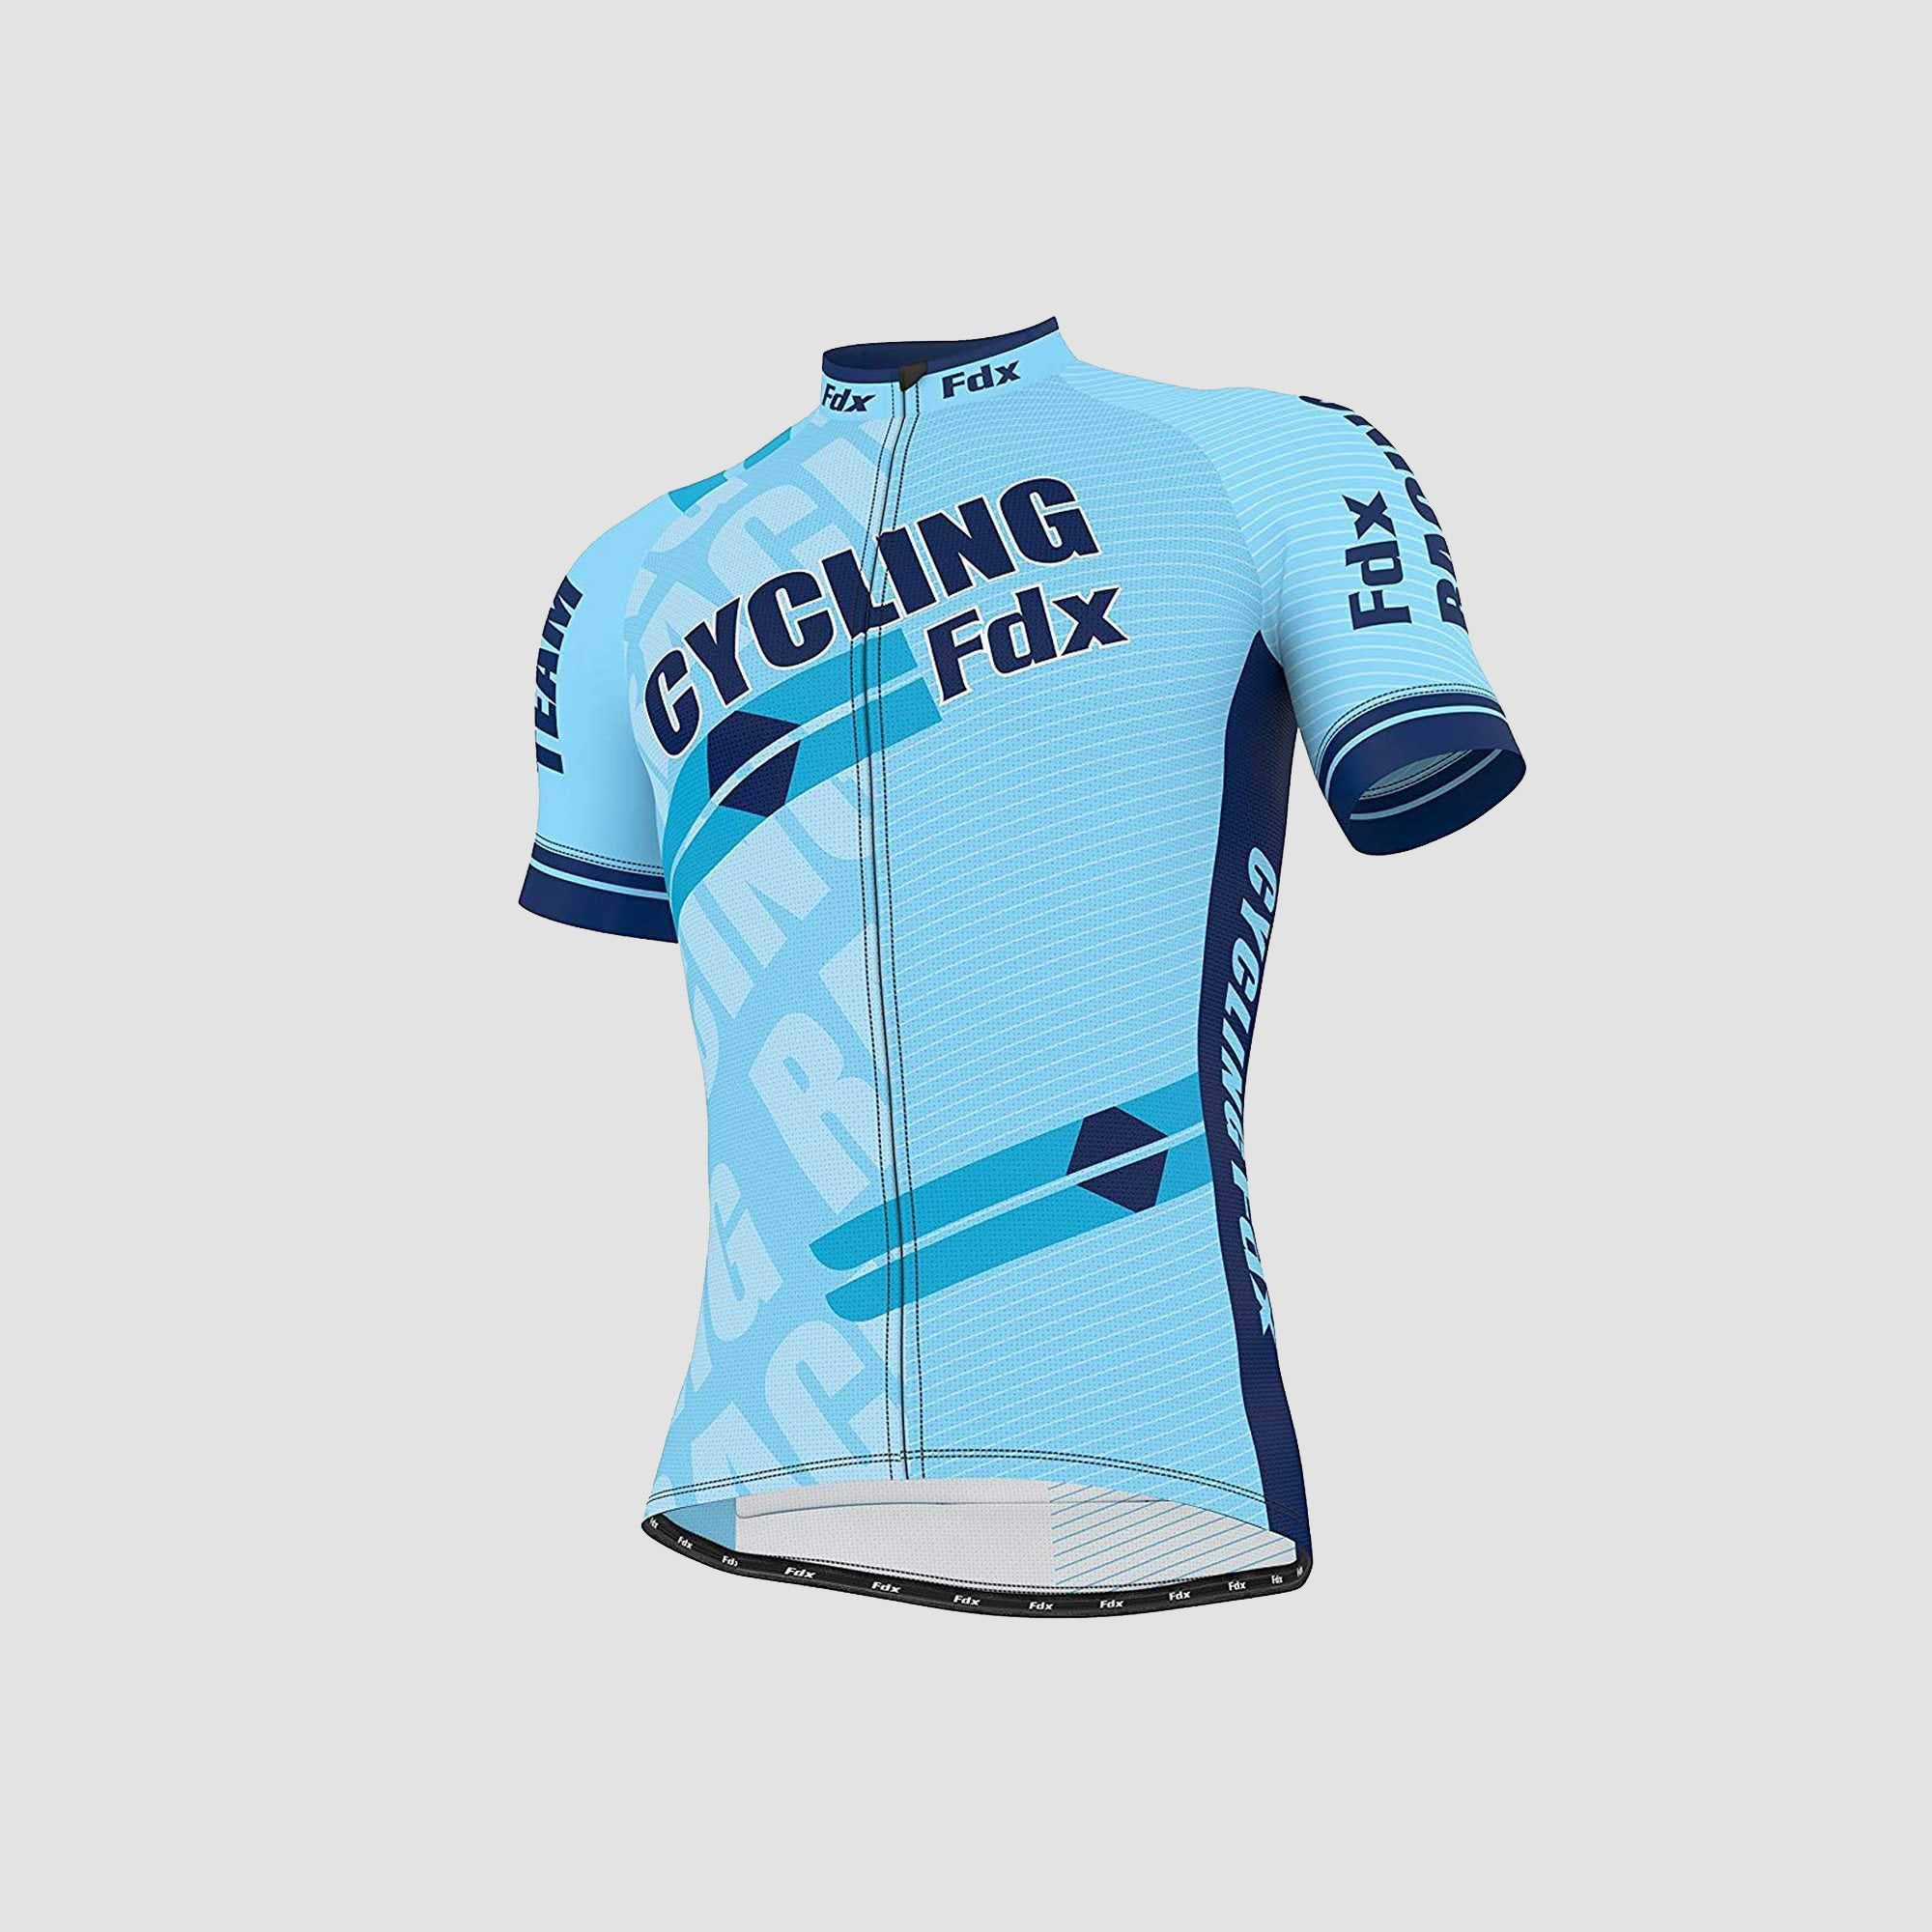 fdx cycling clothing